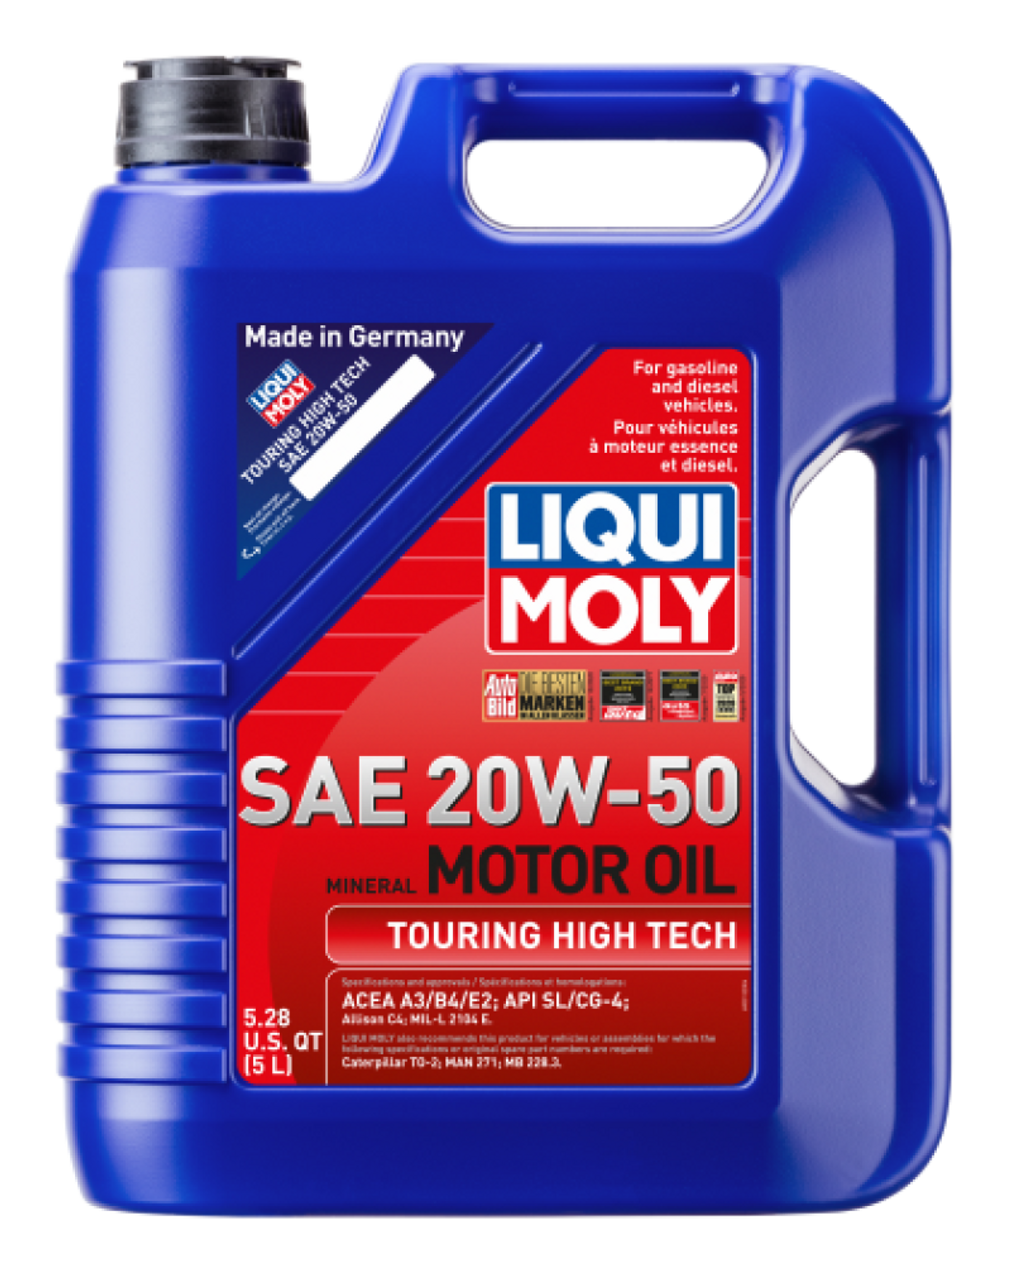 LIQUI MOLY 5L Touring High Tech Motor Oil 20W50 - Single - 20114-1 User 1